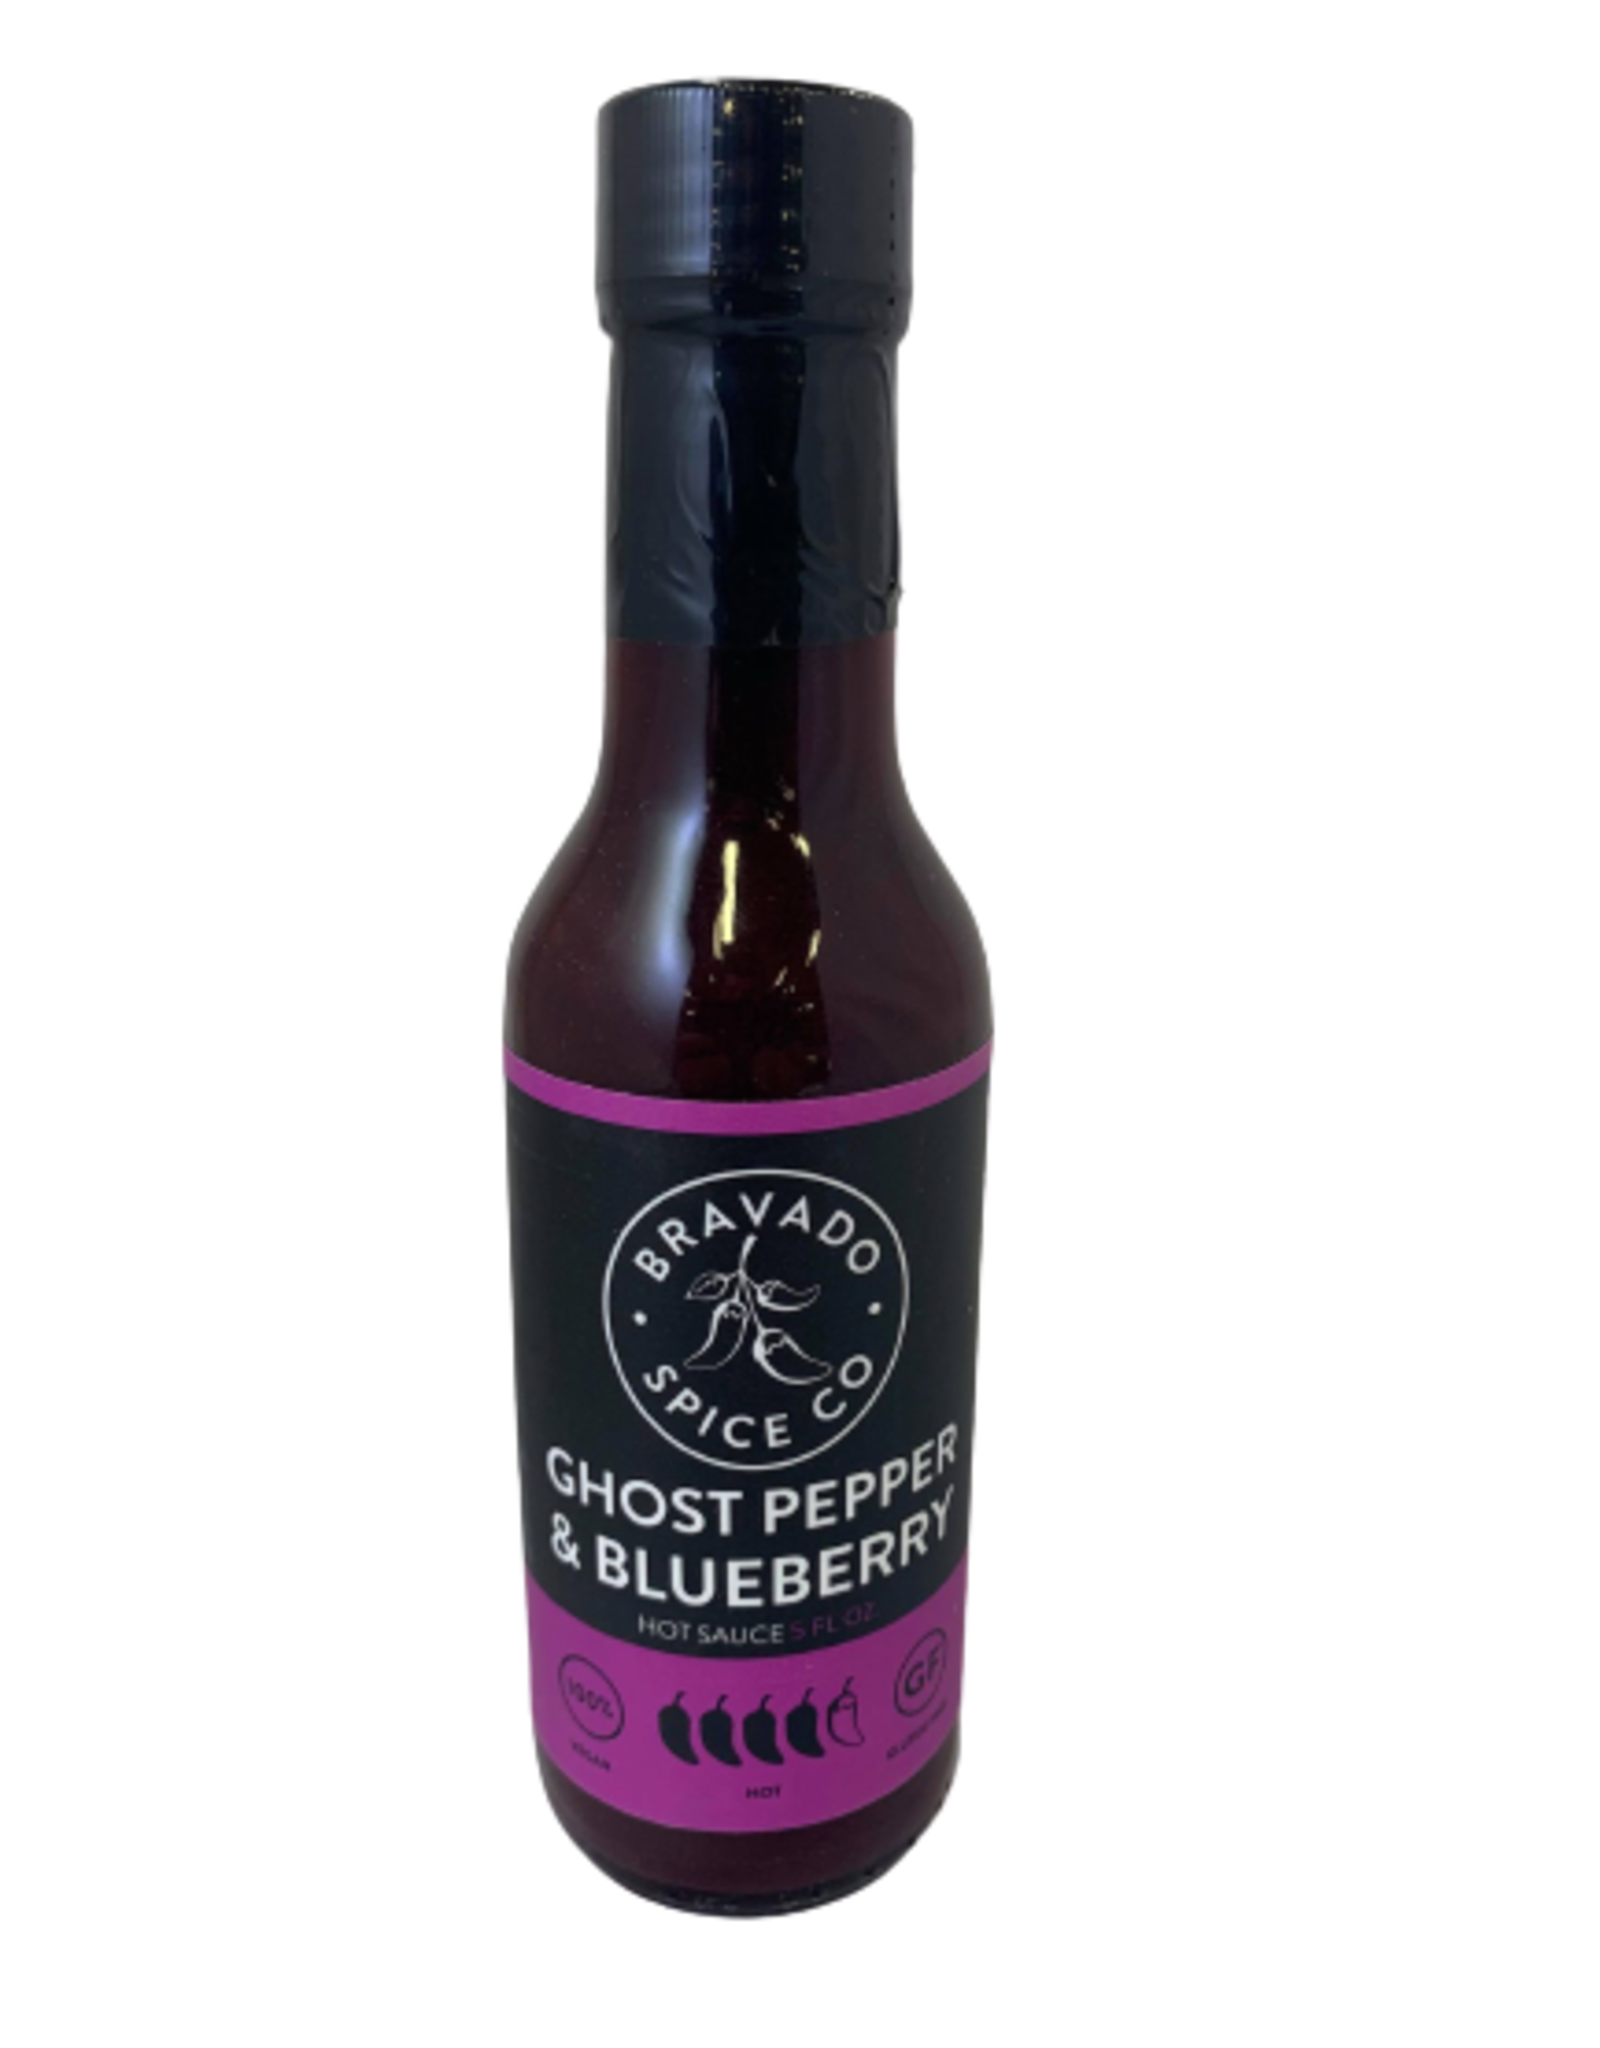 Bravado Ghost Pepper & Blueberry